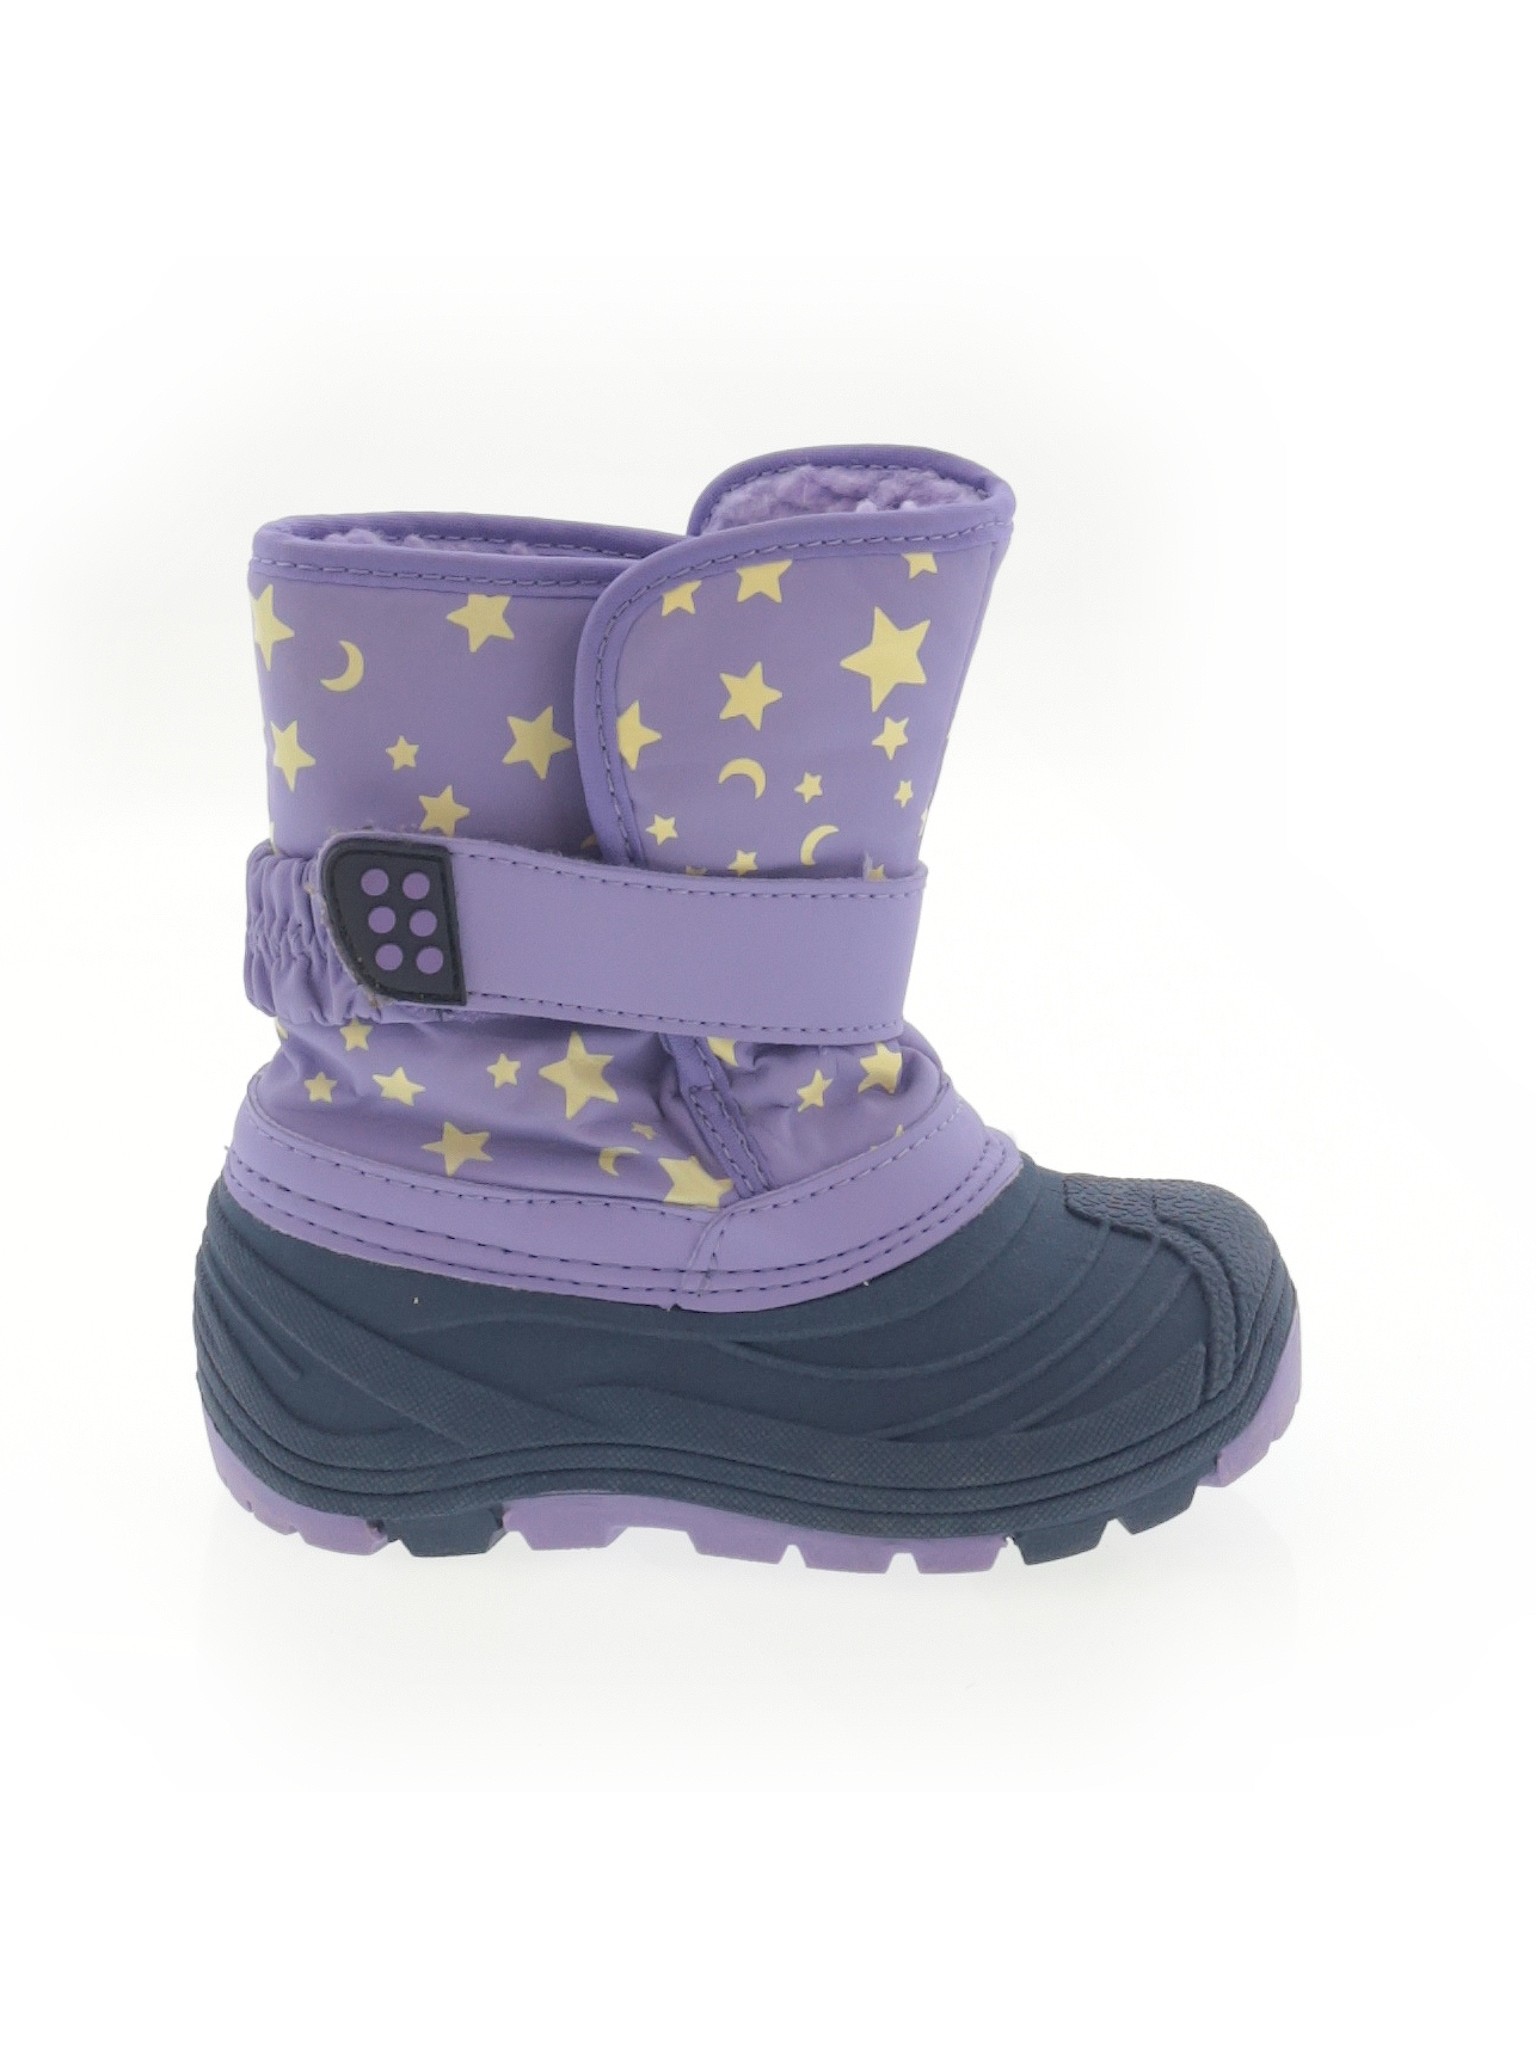 Cat & Jack Girls Purple Boots 7 | eBay